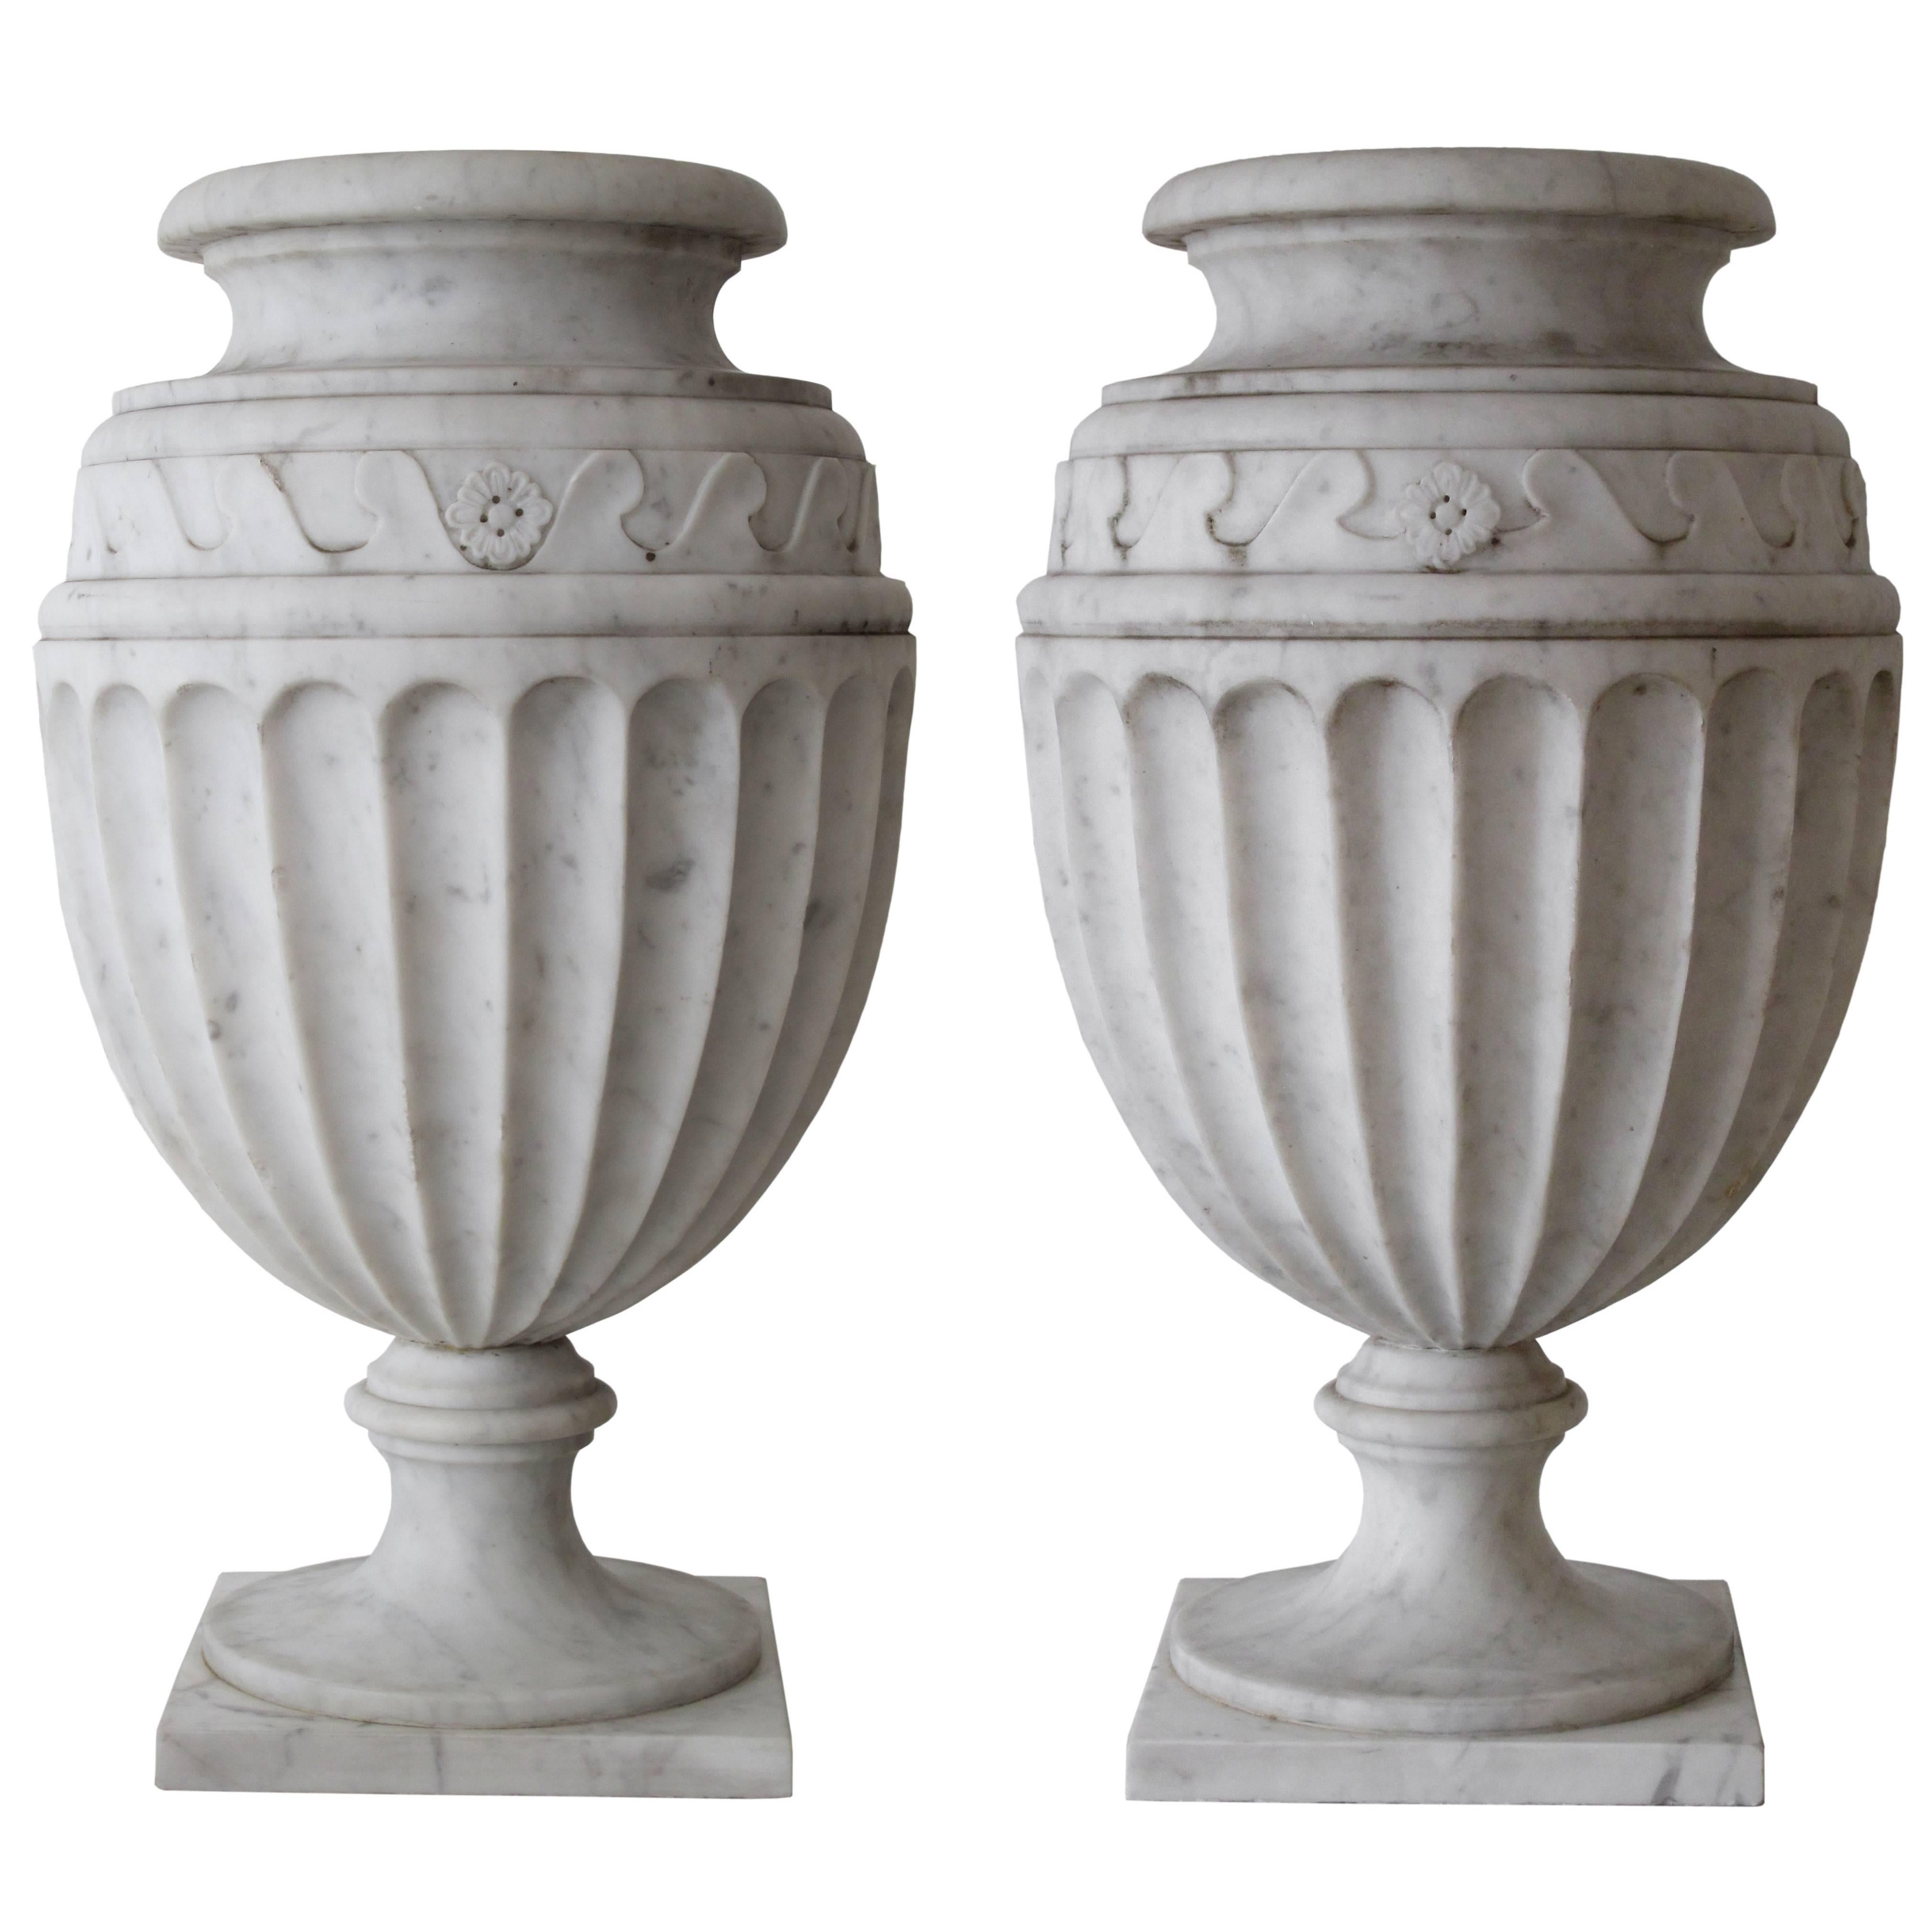 Pair of Elegant Neoclassical Urns